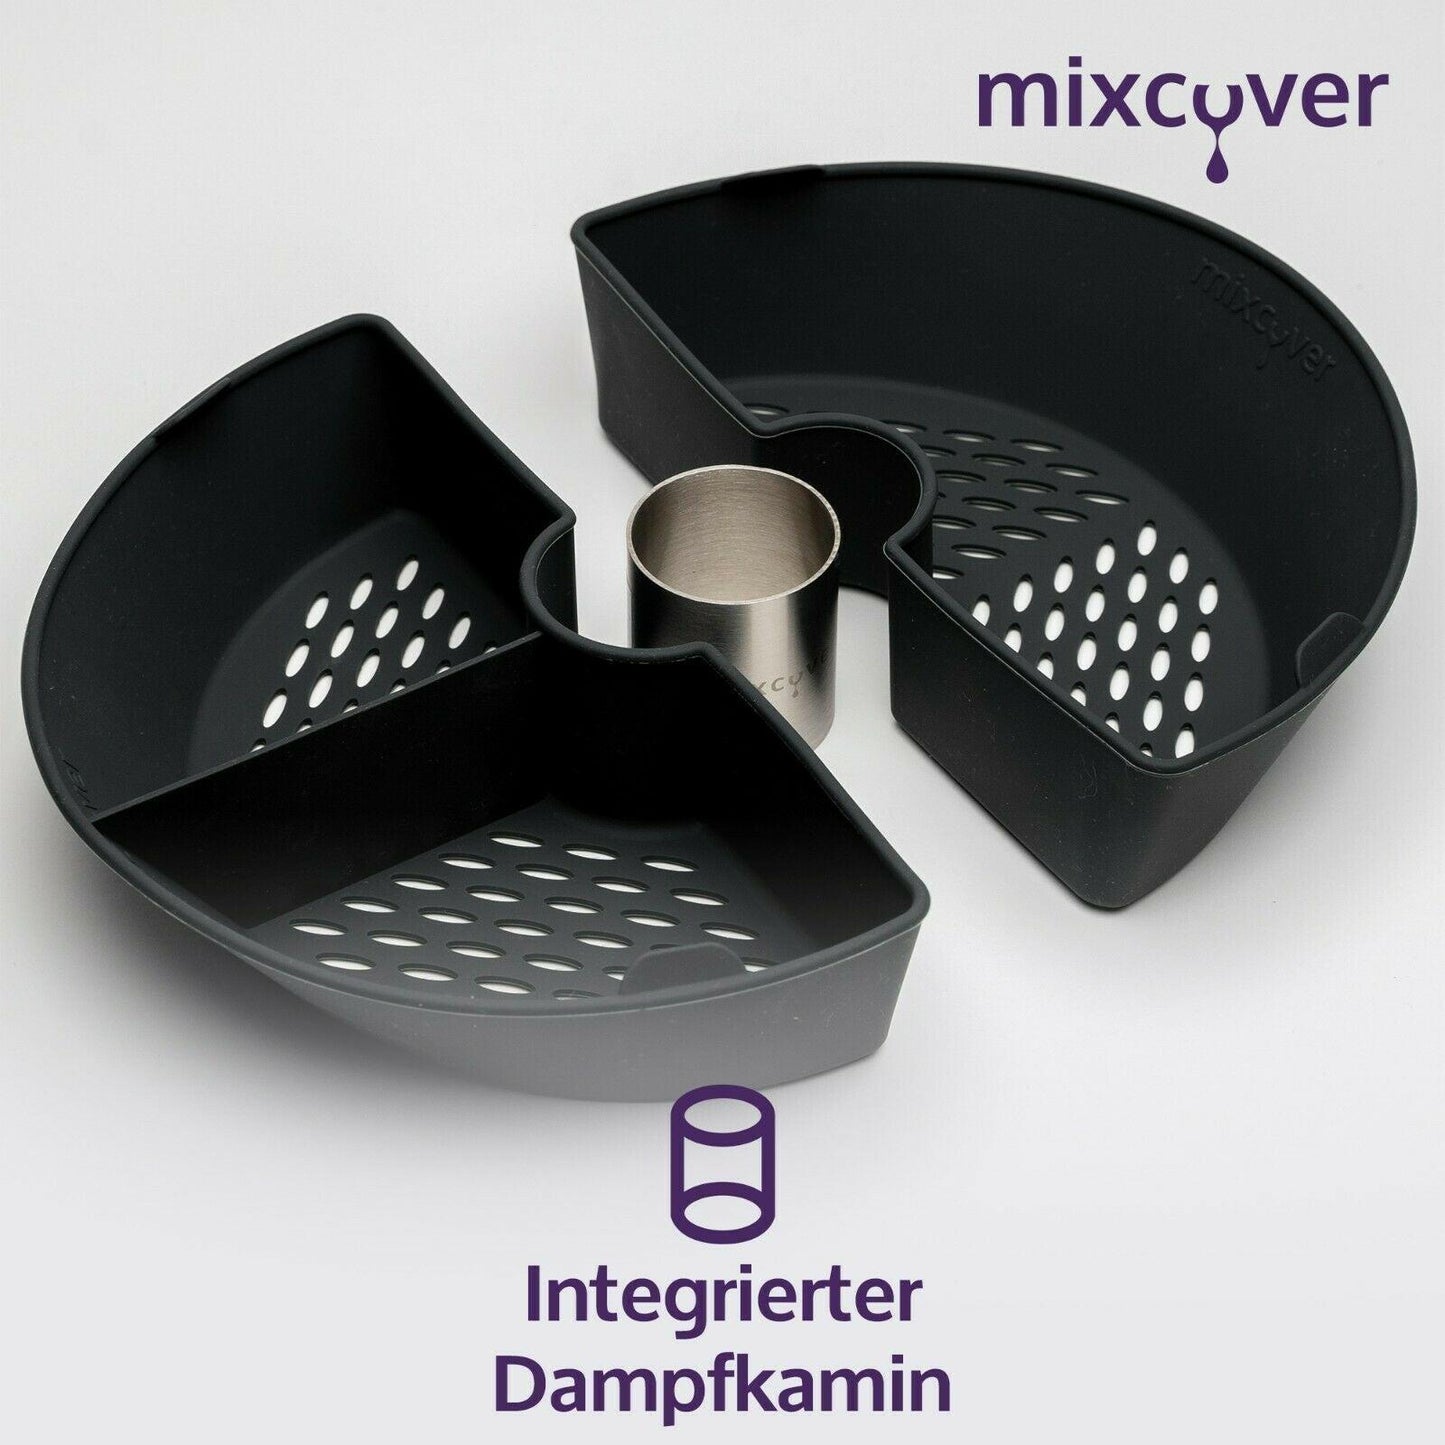 B-Ware: Garraumteiler (viertel) für Bosch Cookit Dampfgarraum - Mixcover - Mixcover